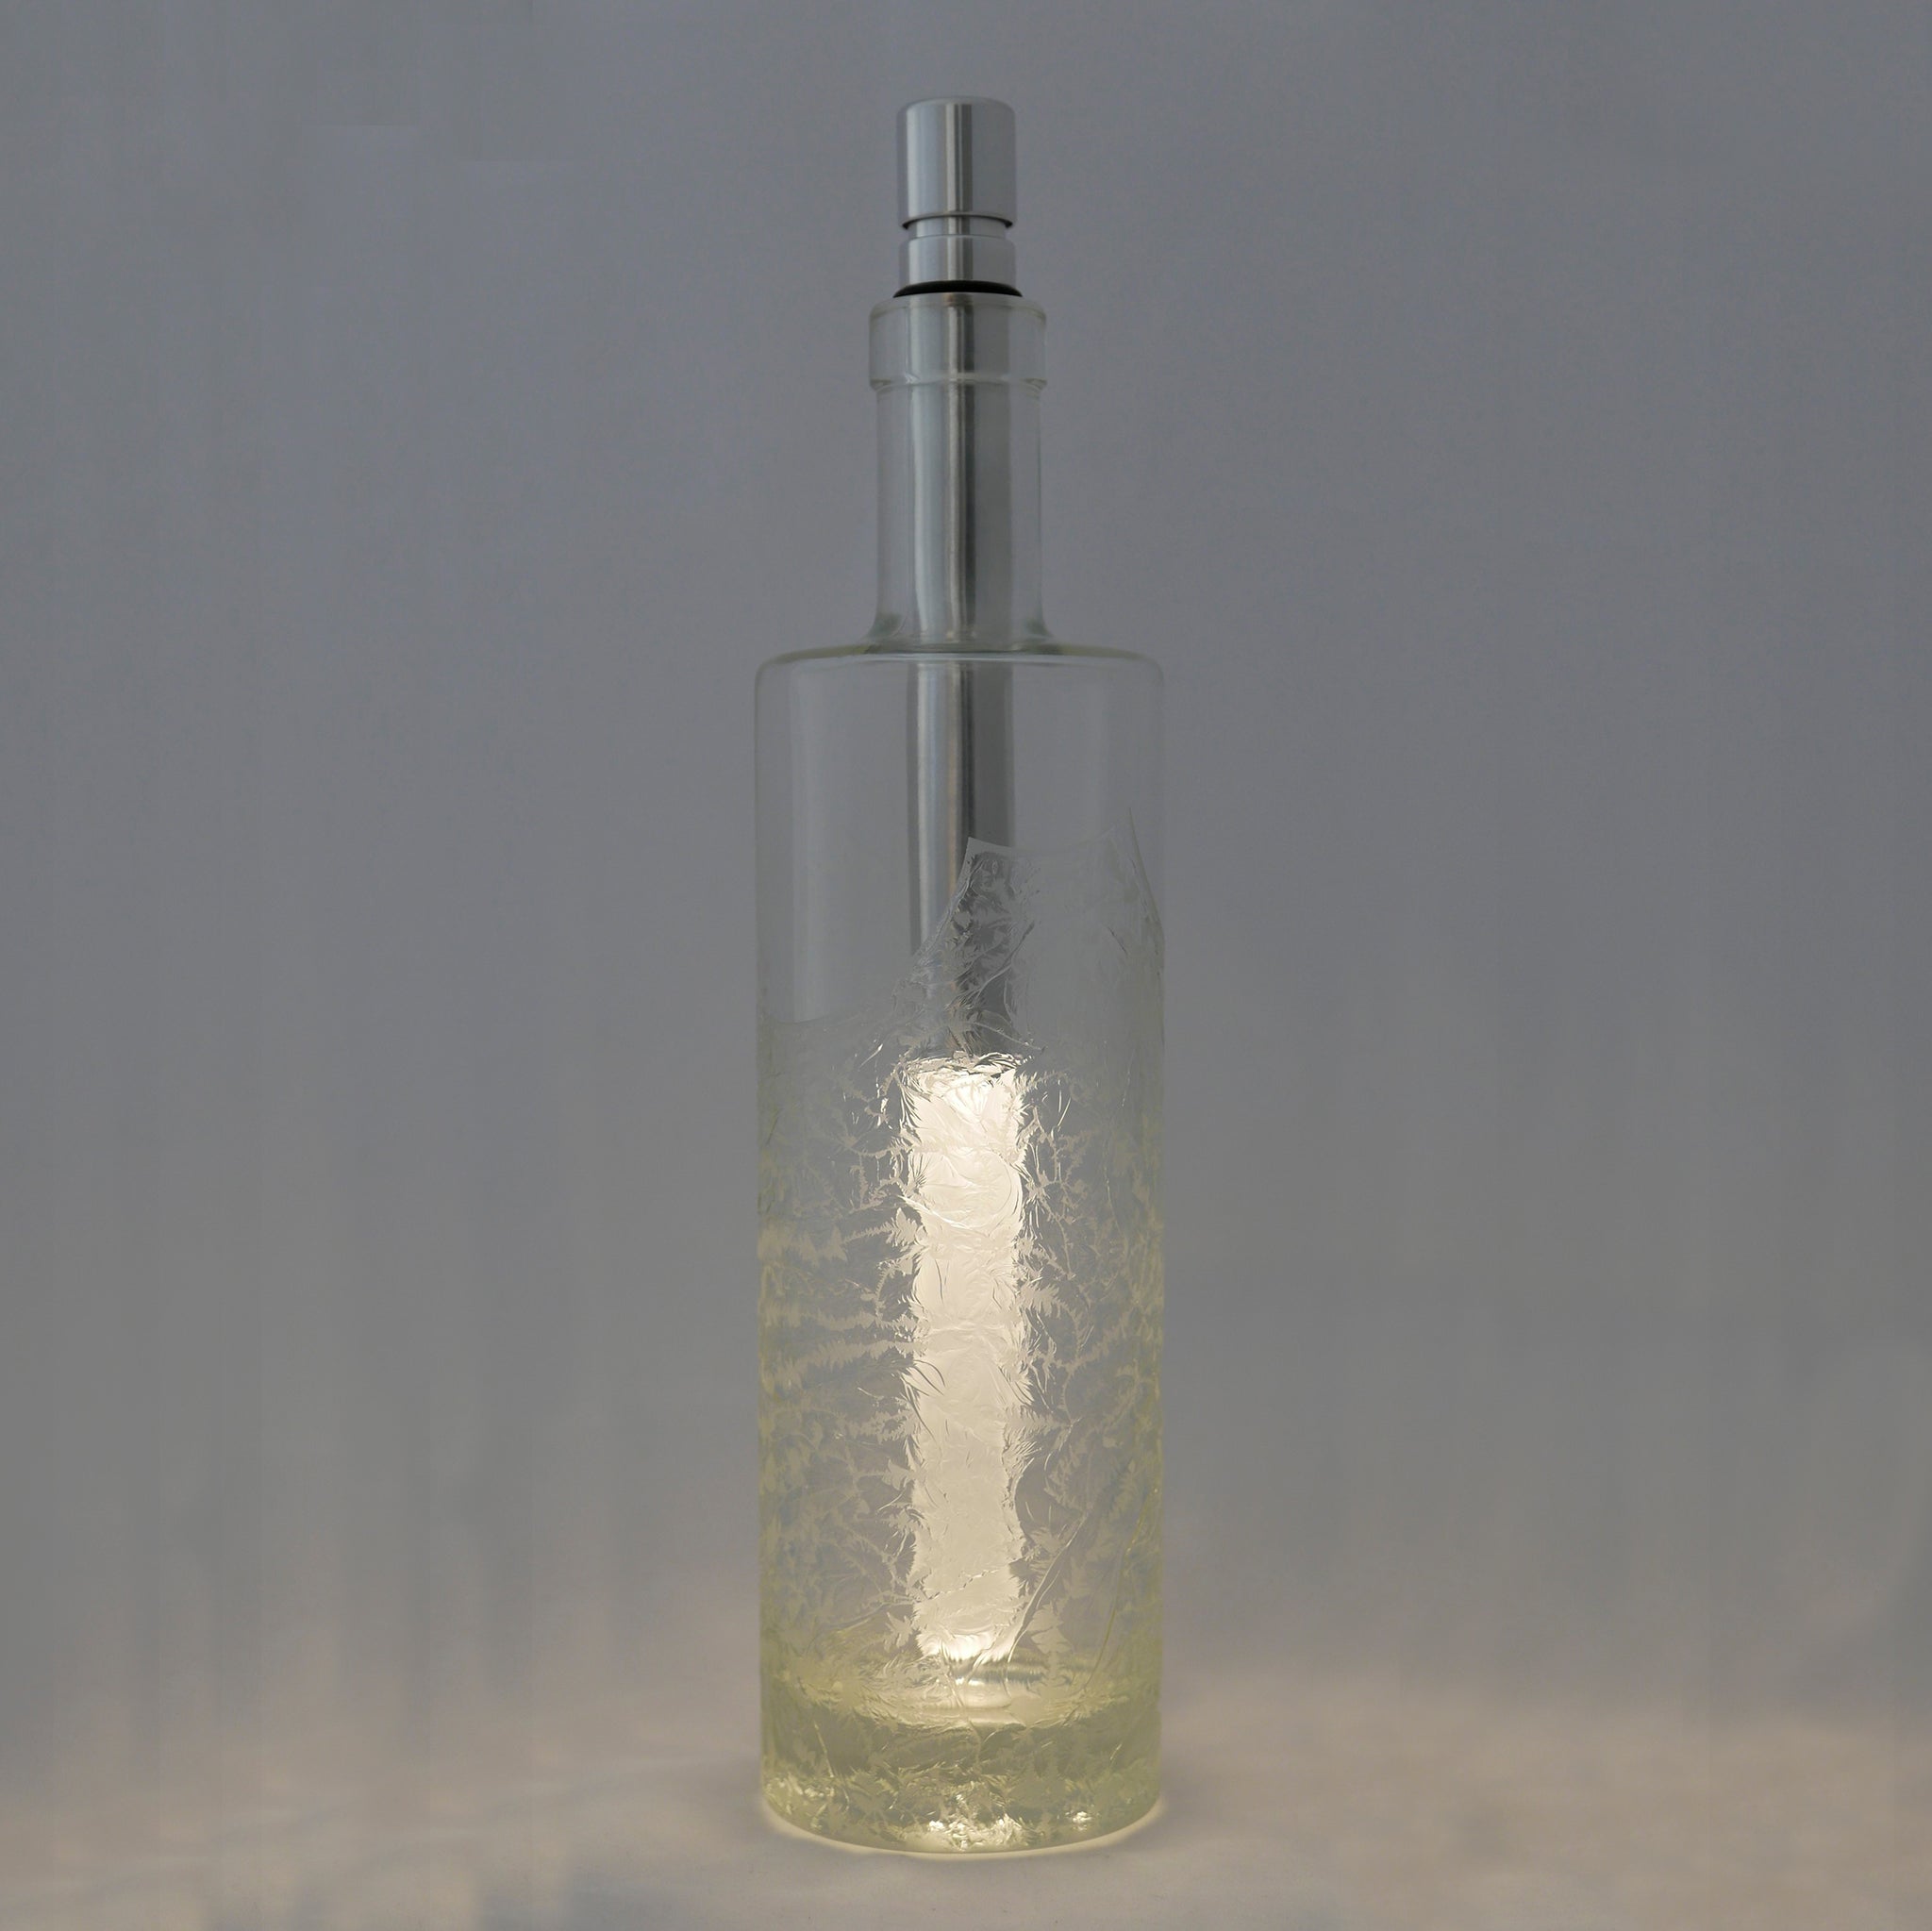 Bottlelight LED Flessenlamp│art. BOT03-W│in doorzichtege fles met  ice-effect